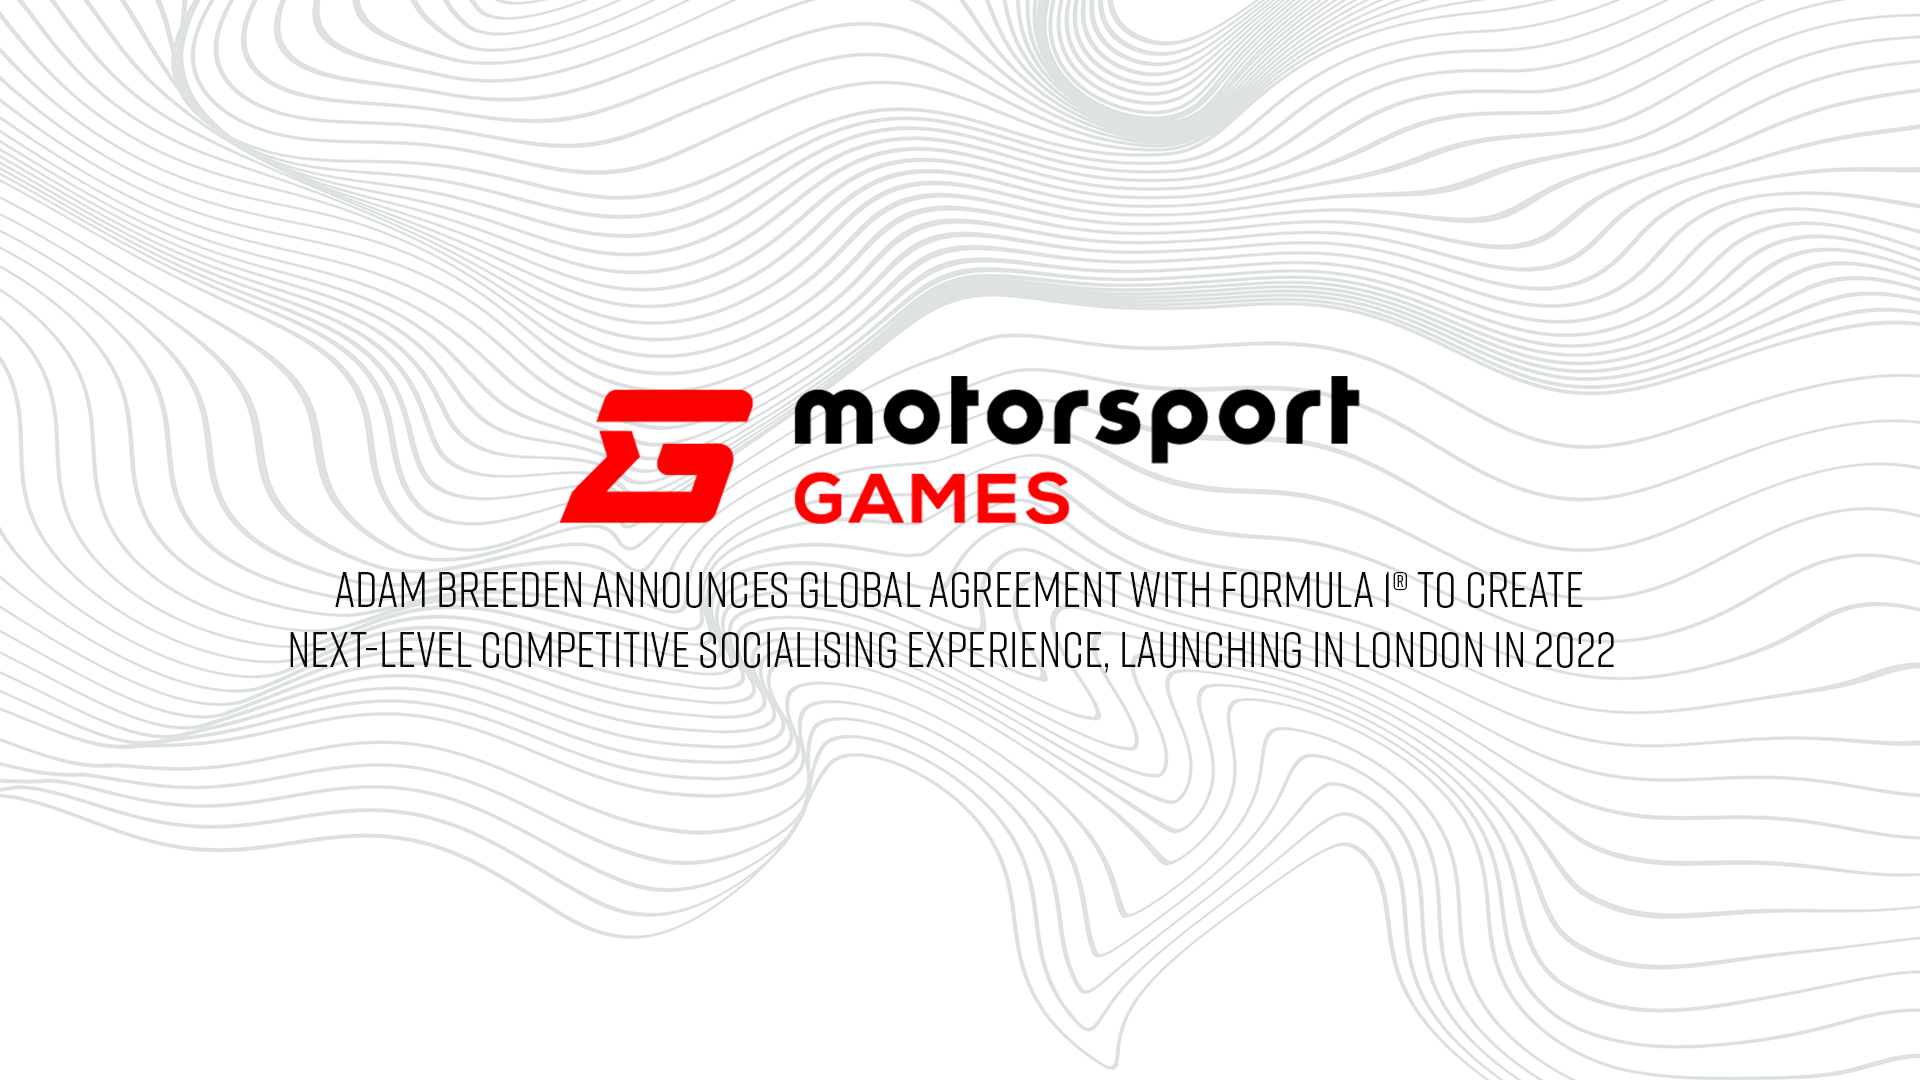 motorsport games-f1